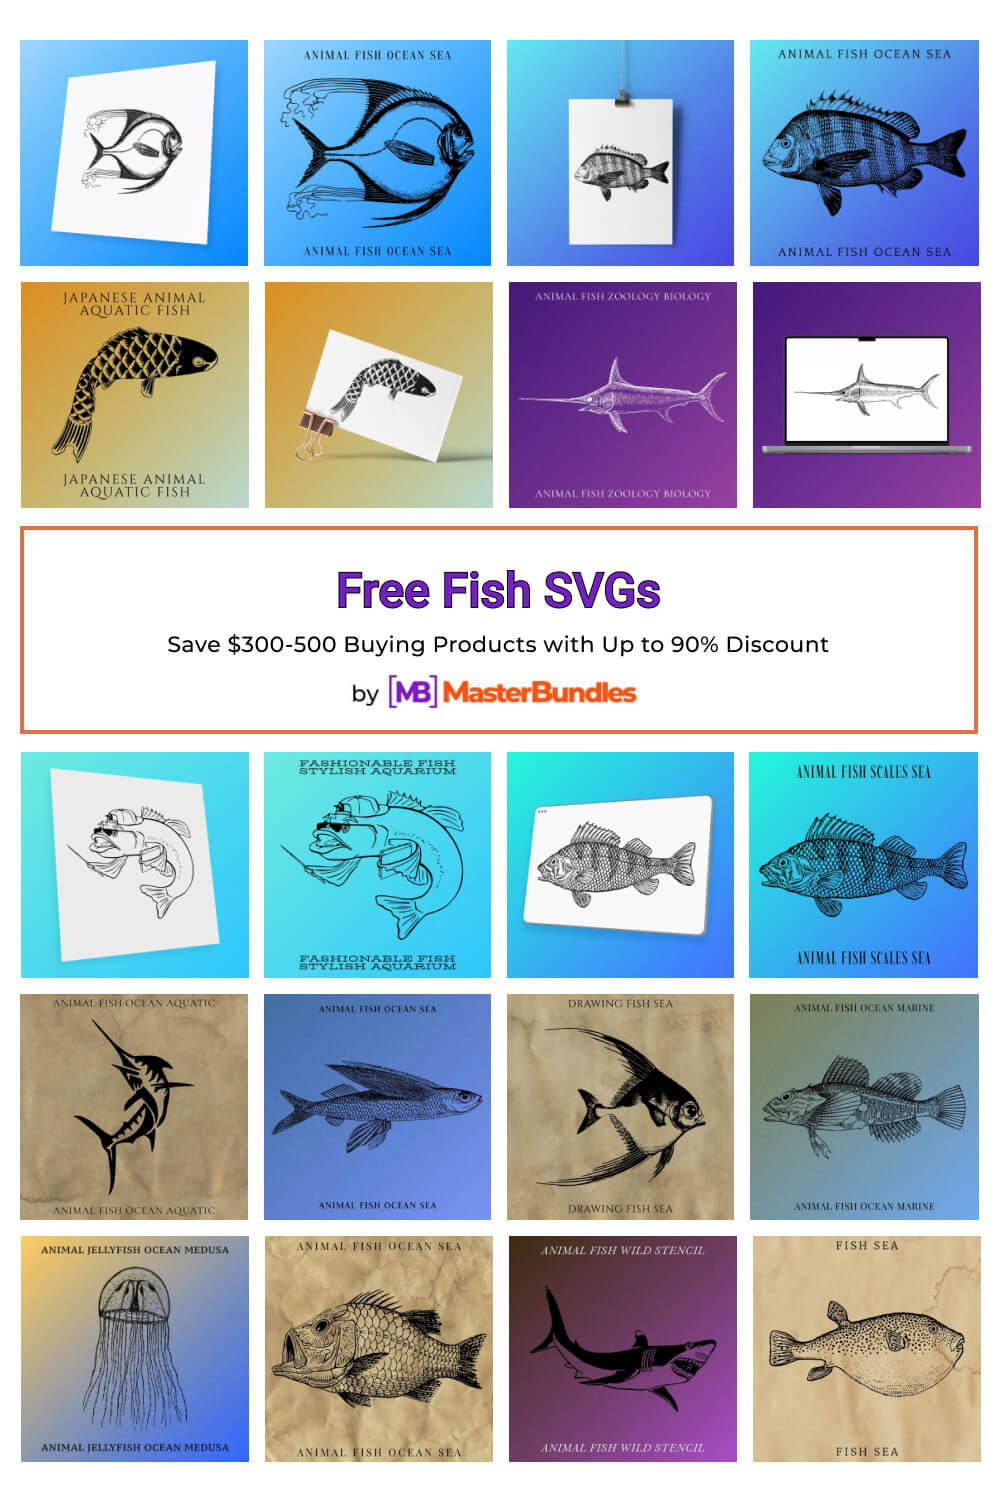 free fish svgs pinterest image.